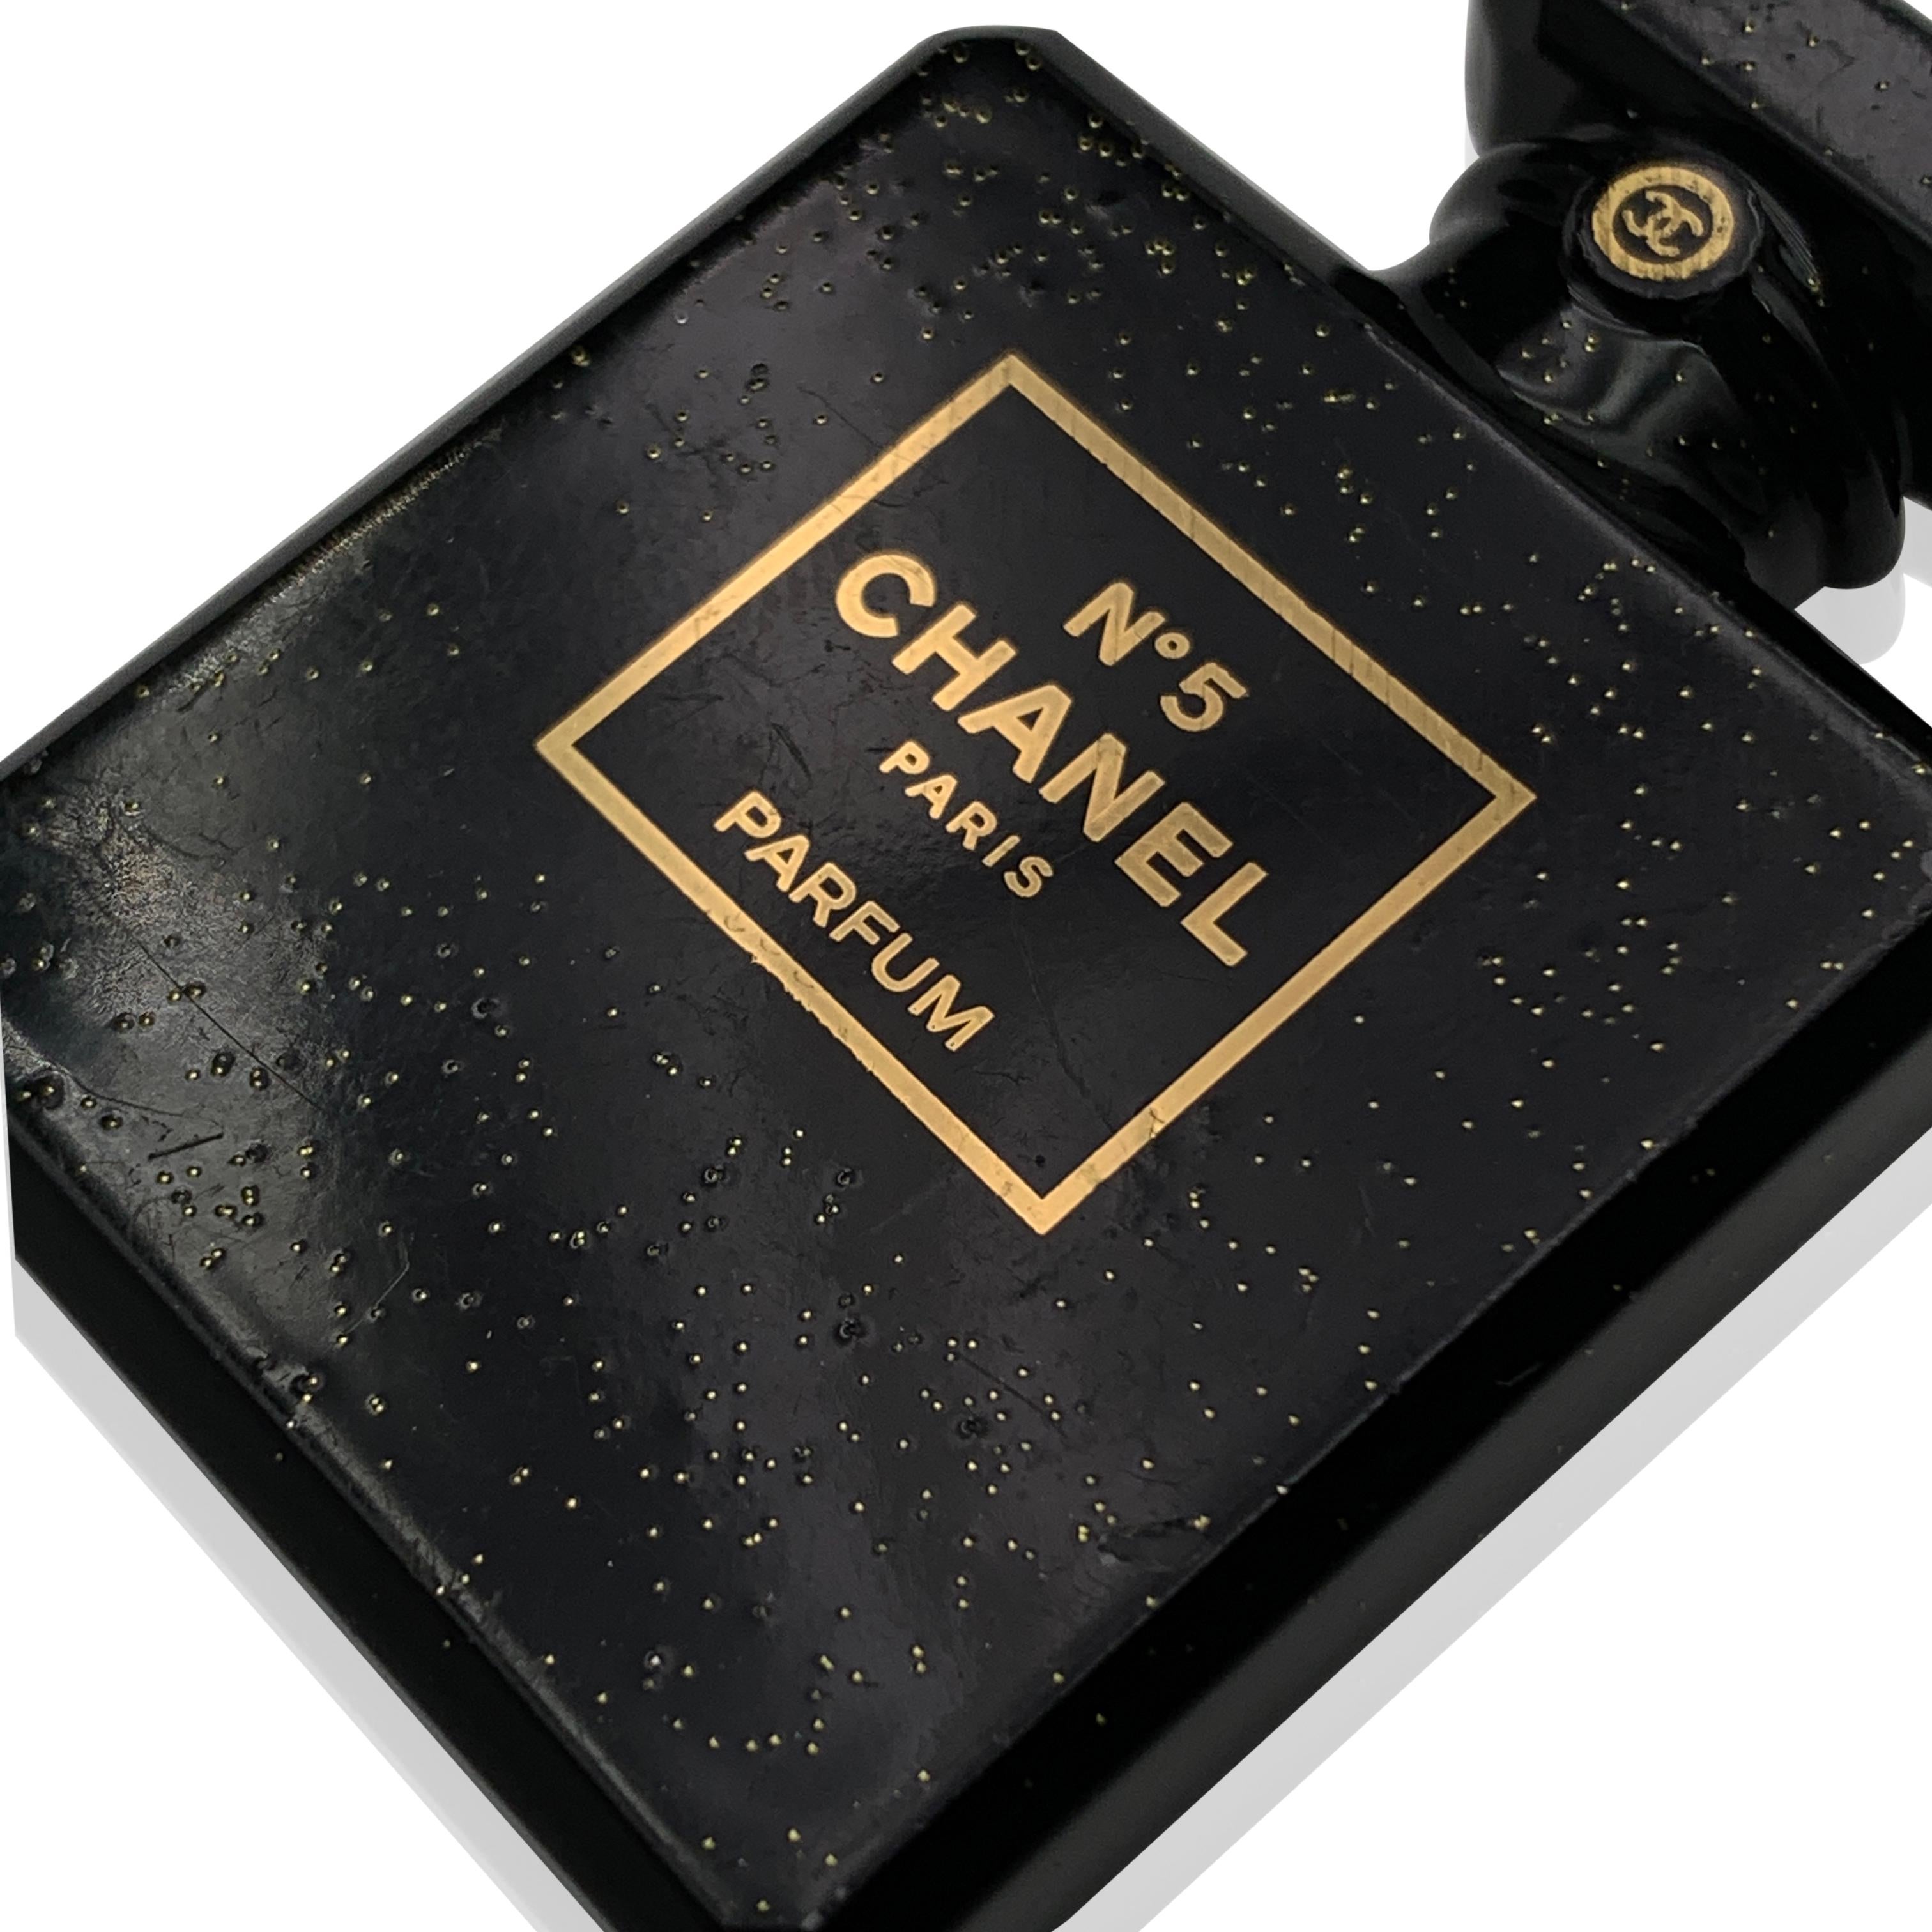 Chanel Black Gold Resin Glitter Chanel No. 5 Parfum Brooch Pin 2